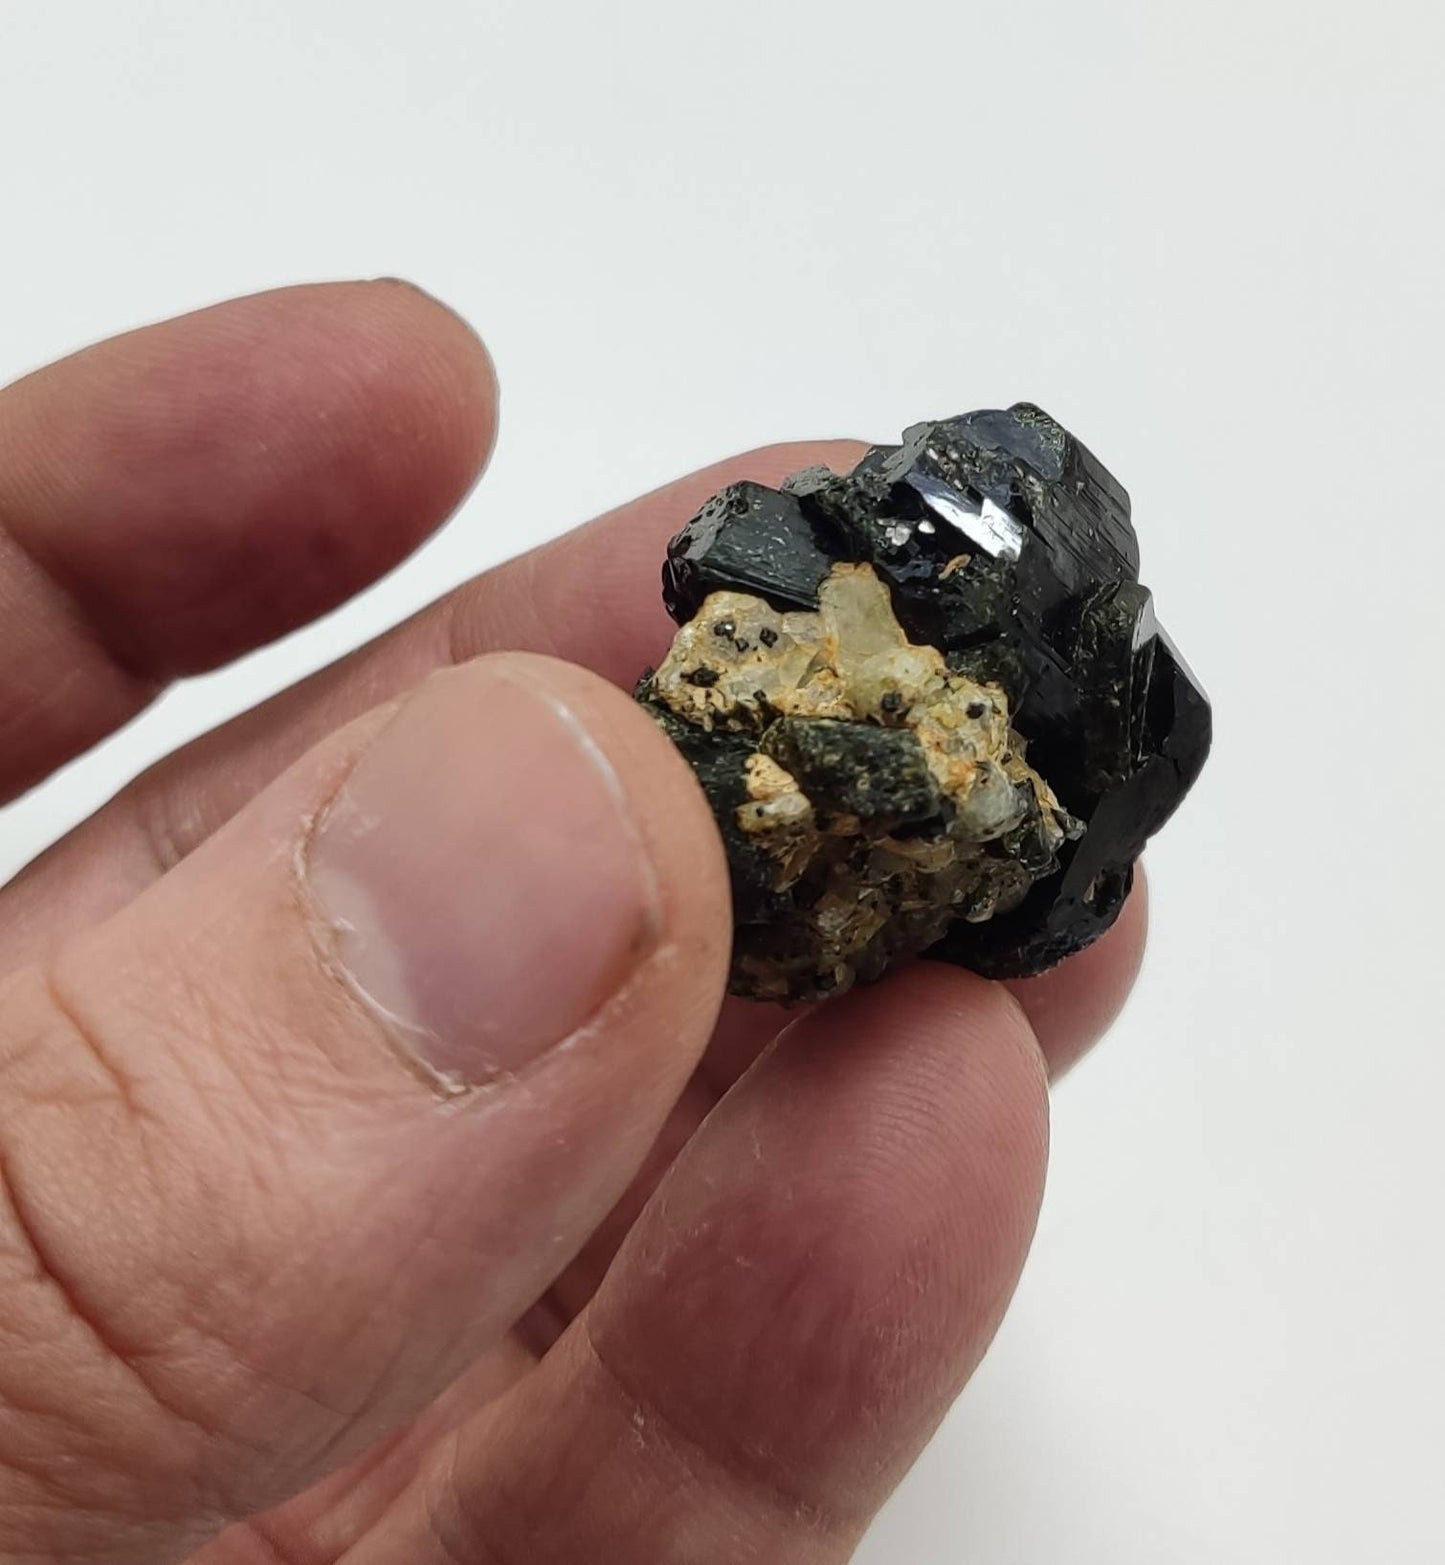 An amazing specimen of epidote crystals on matrix 37 grams